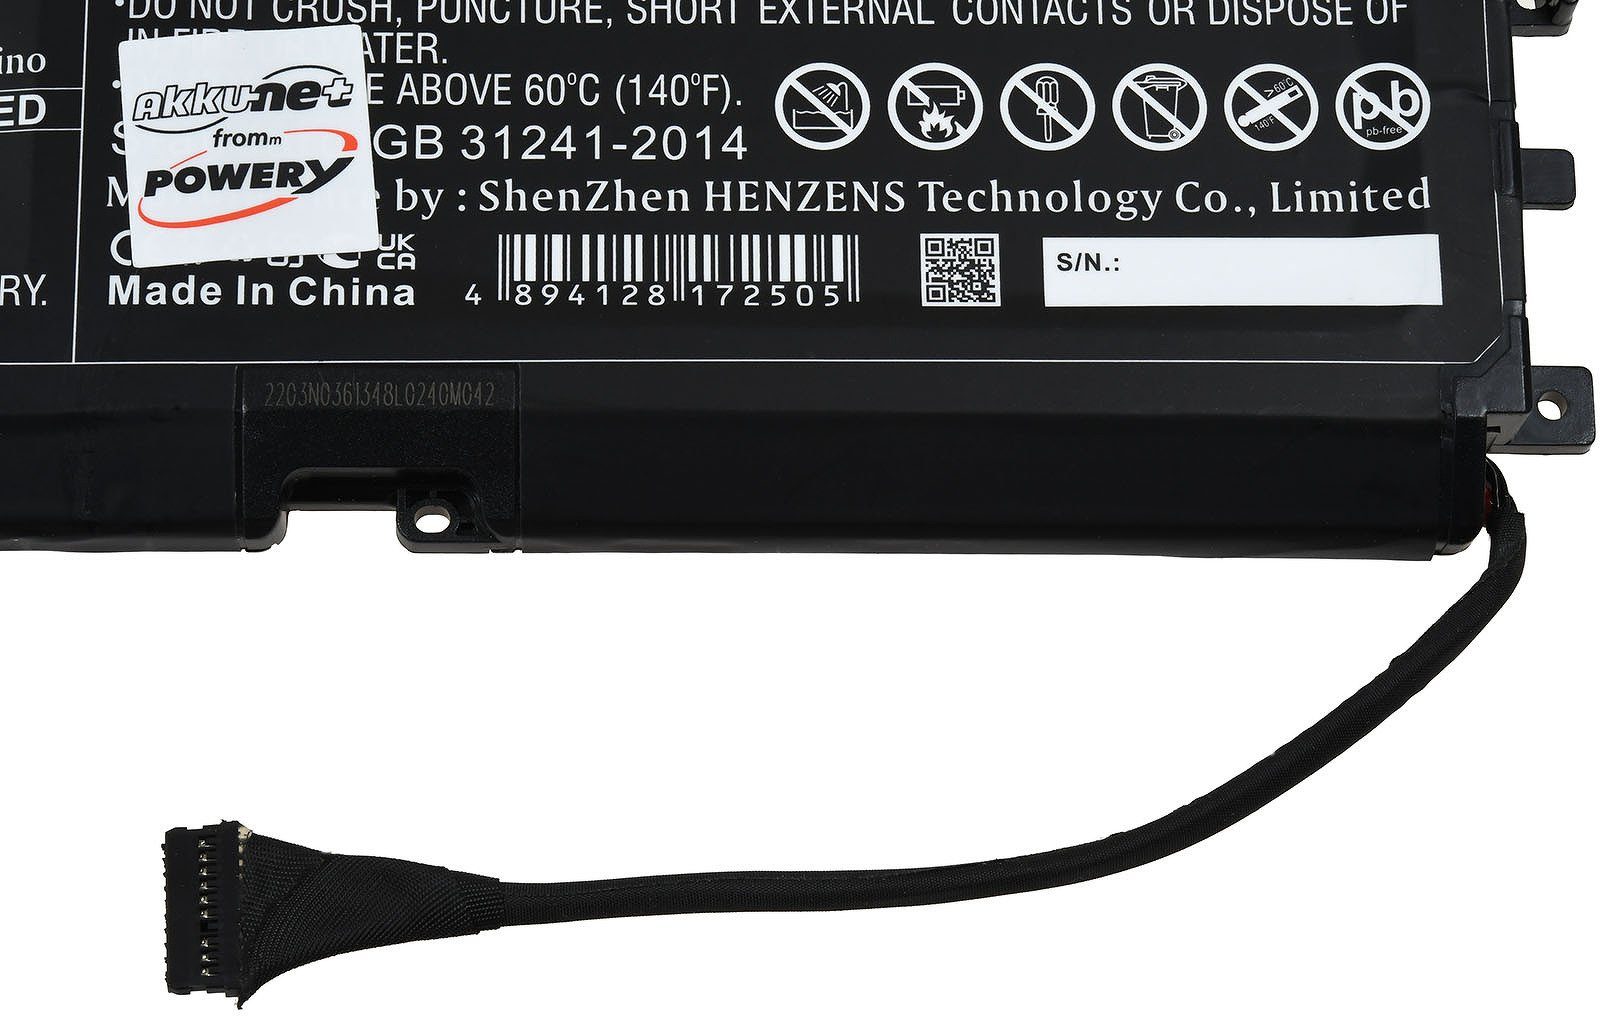 Laptop-Akku Akku 2020 Blade Powery 15 mAh für V) Razer 4200 (15.4